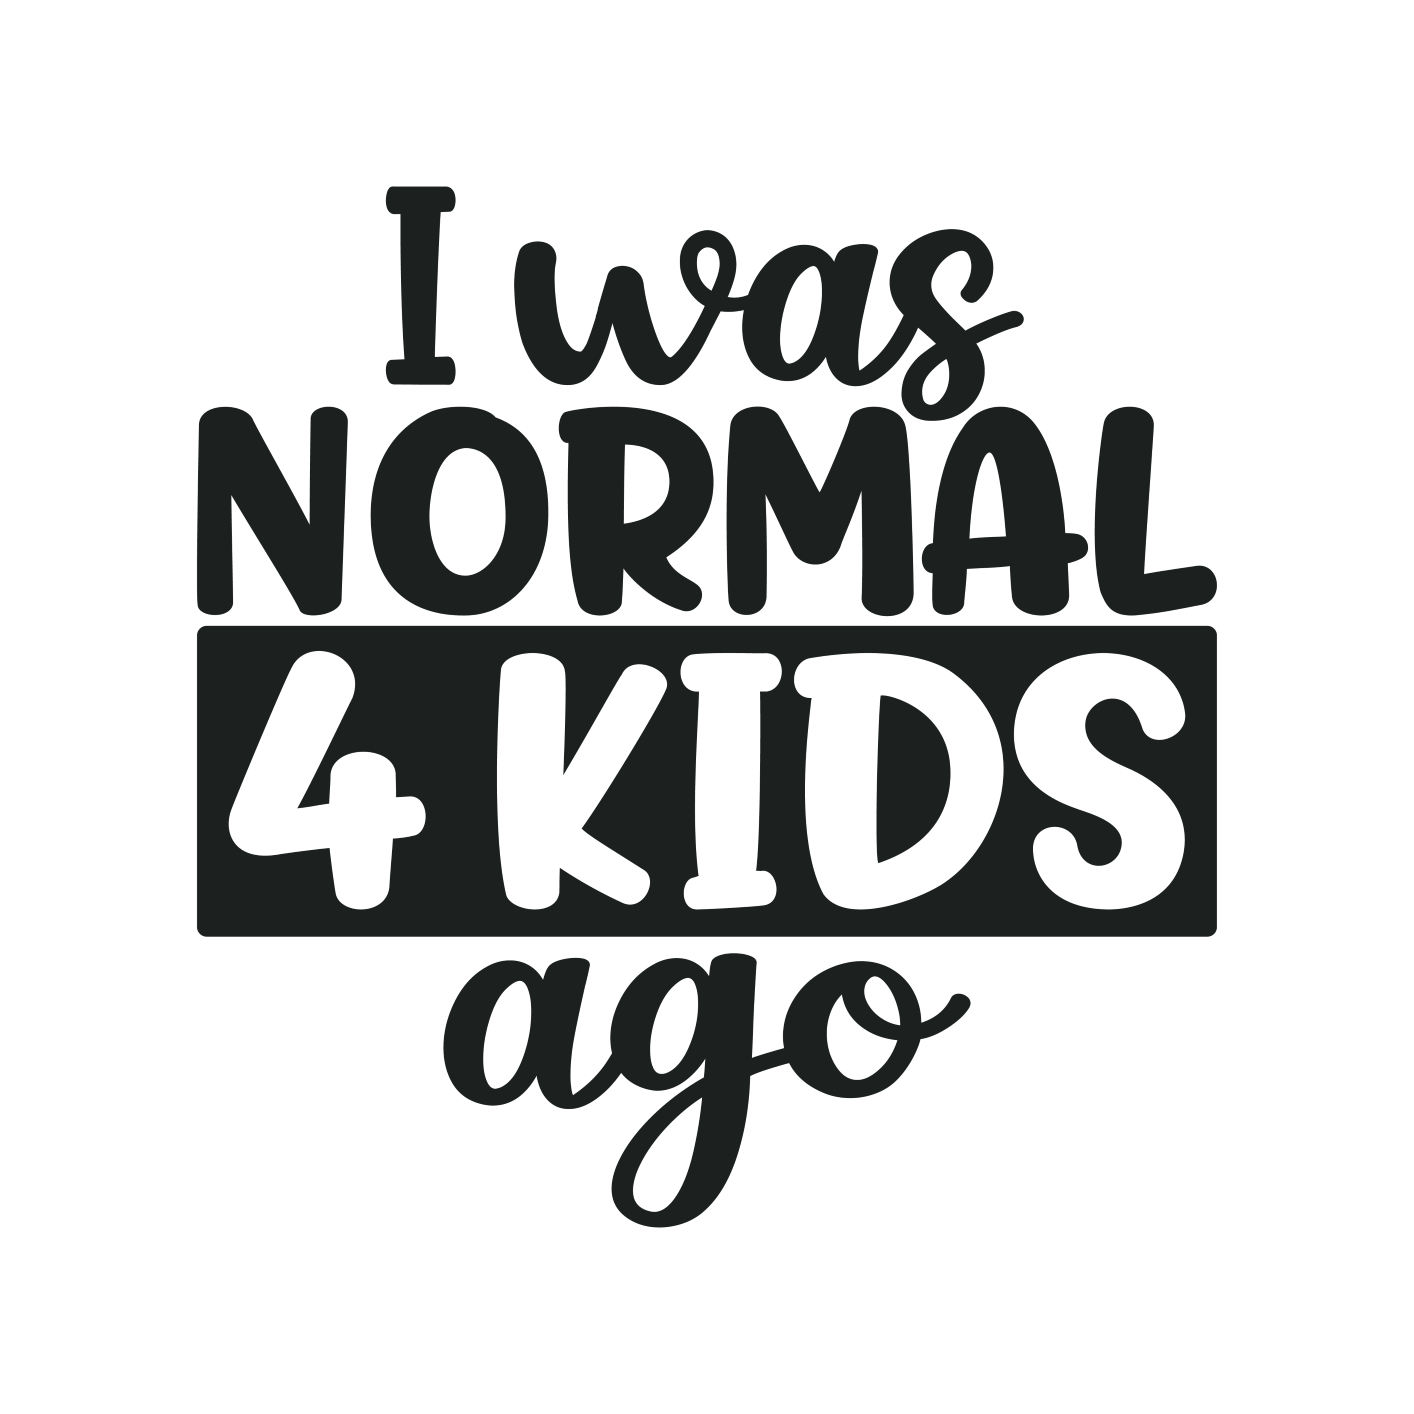 I was normal 4 kids ago